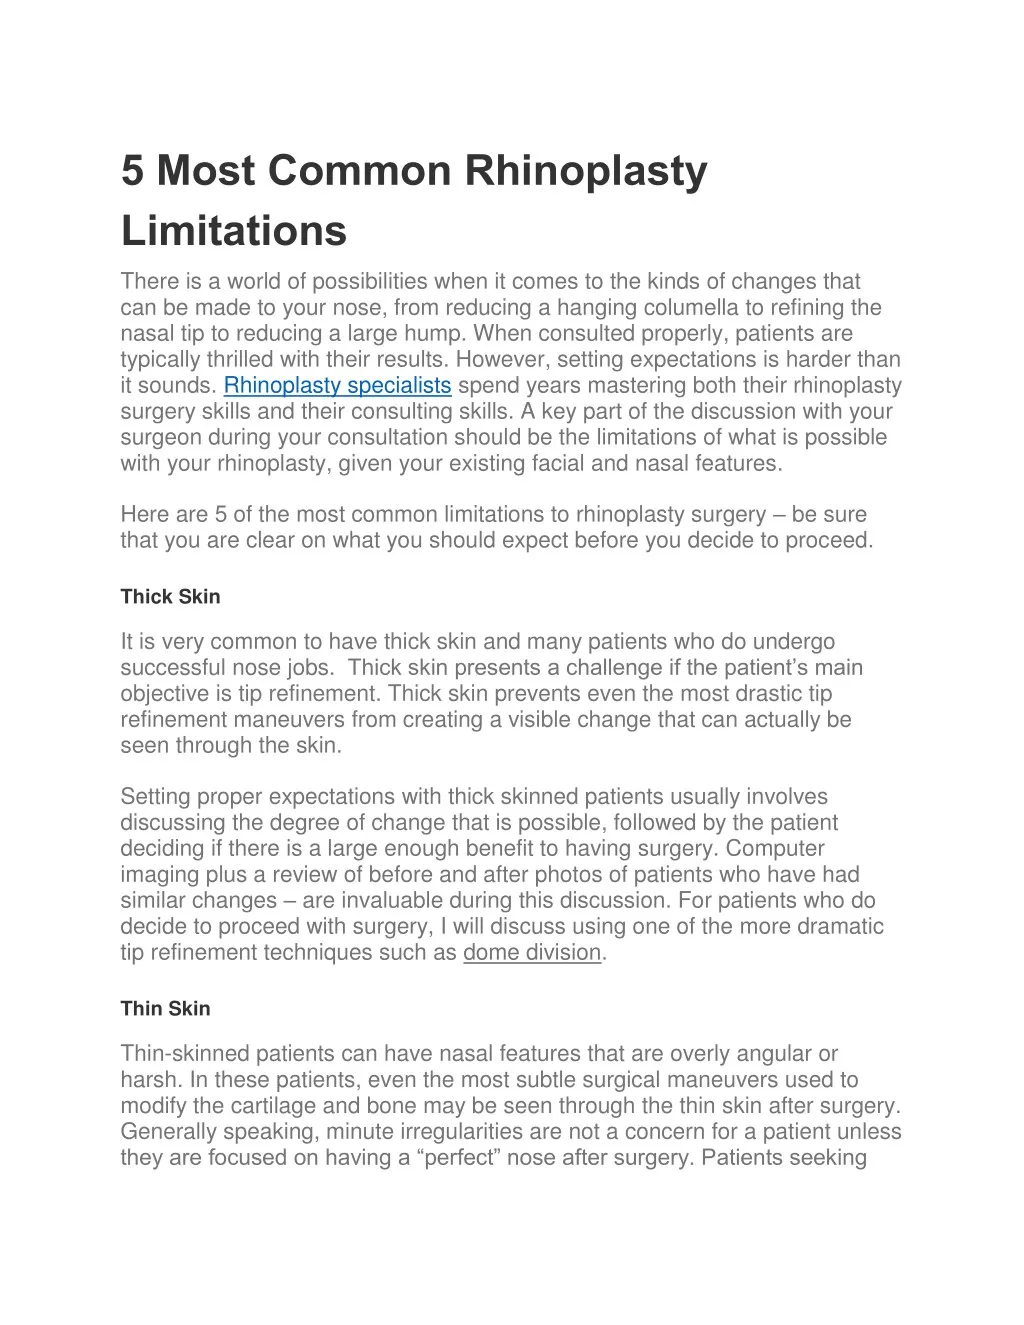 5 most common rhinoplasty limitations